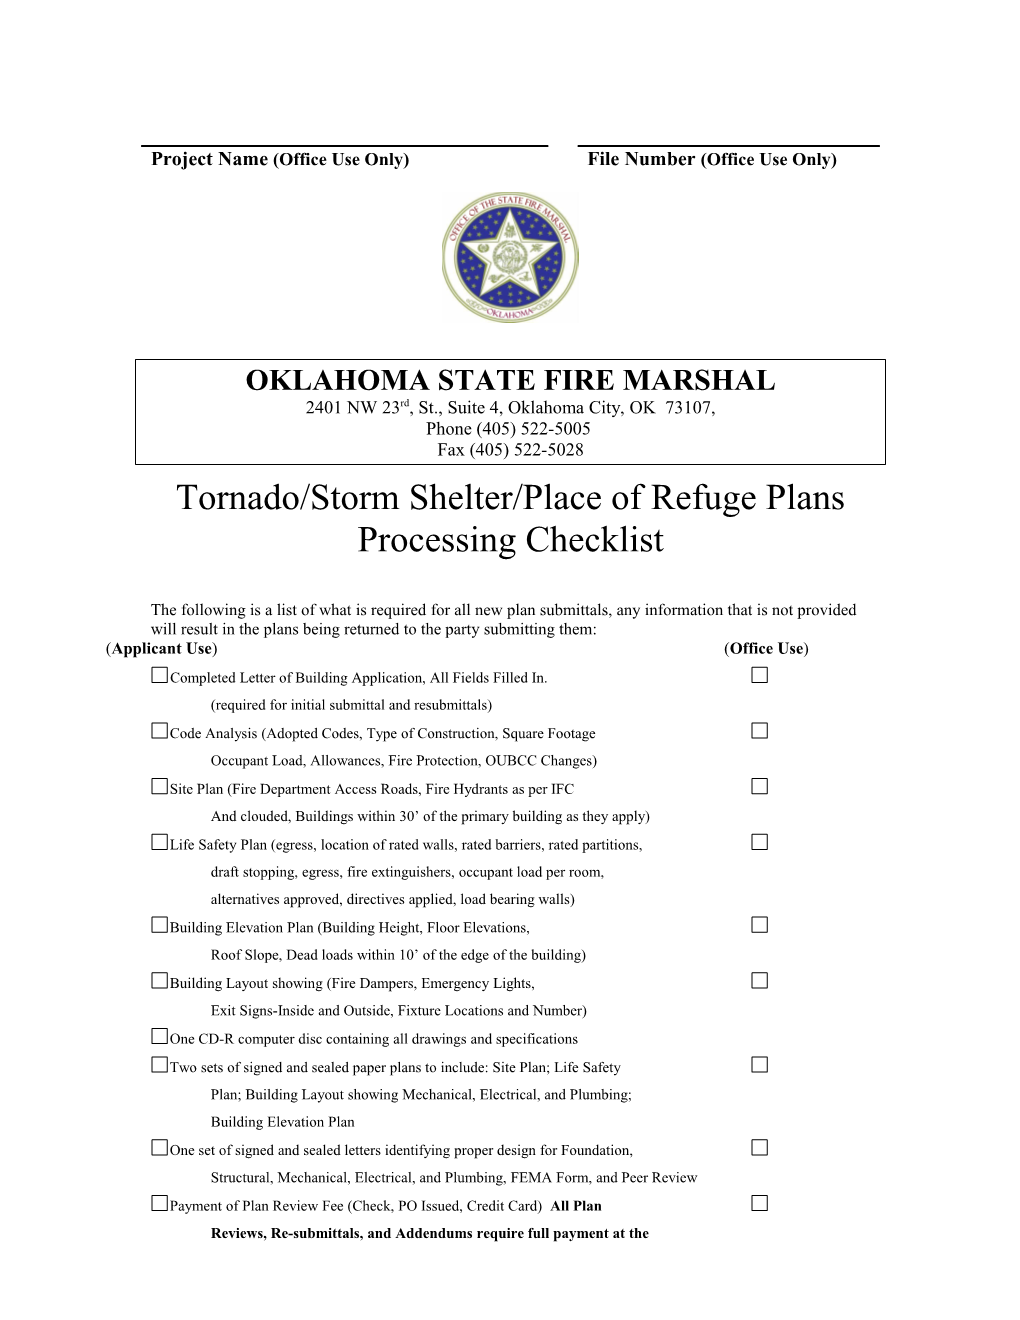 Tornado/Storm Shelter/Place of Refuge Plans Processing Checklist